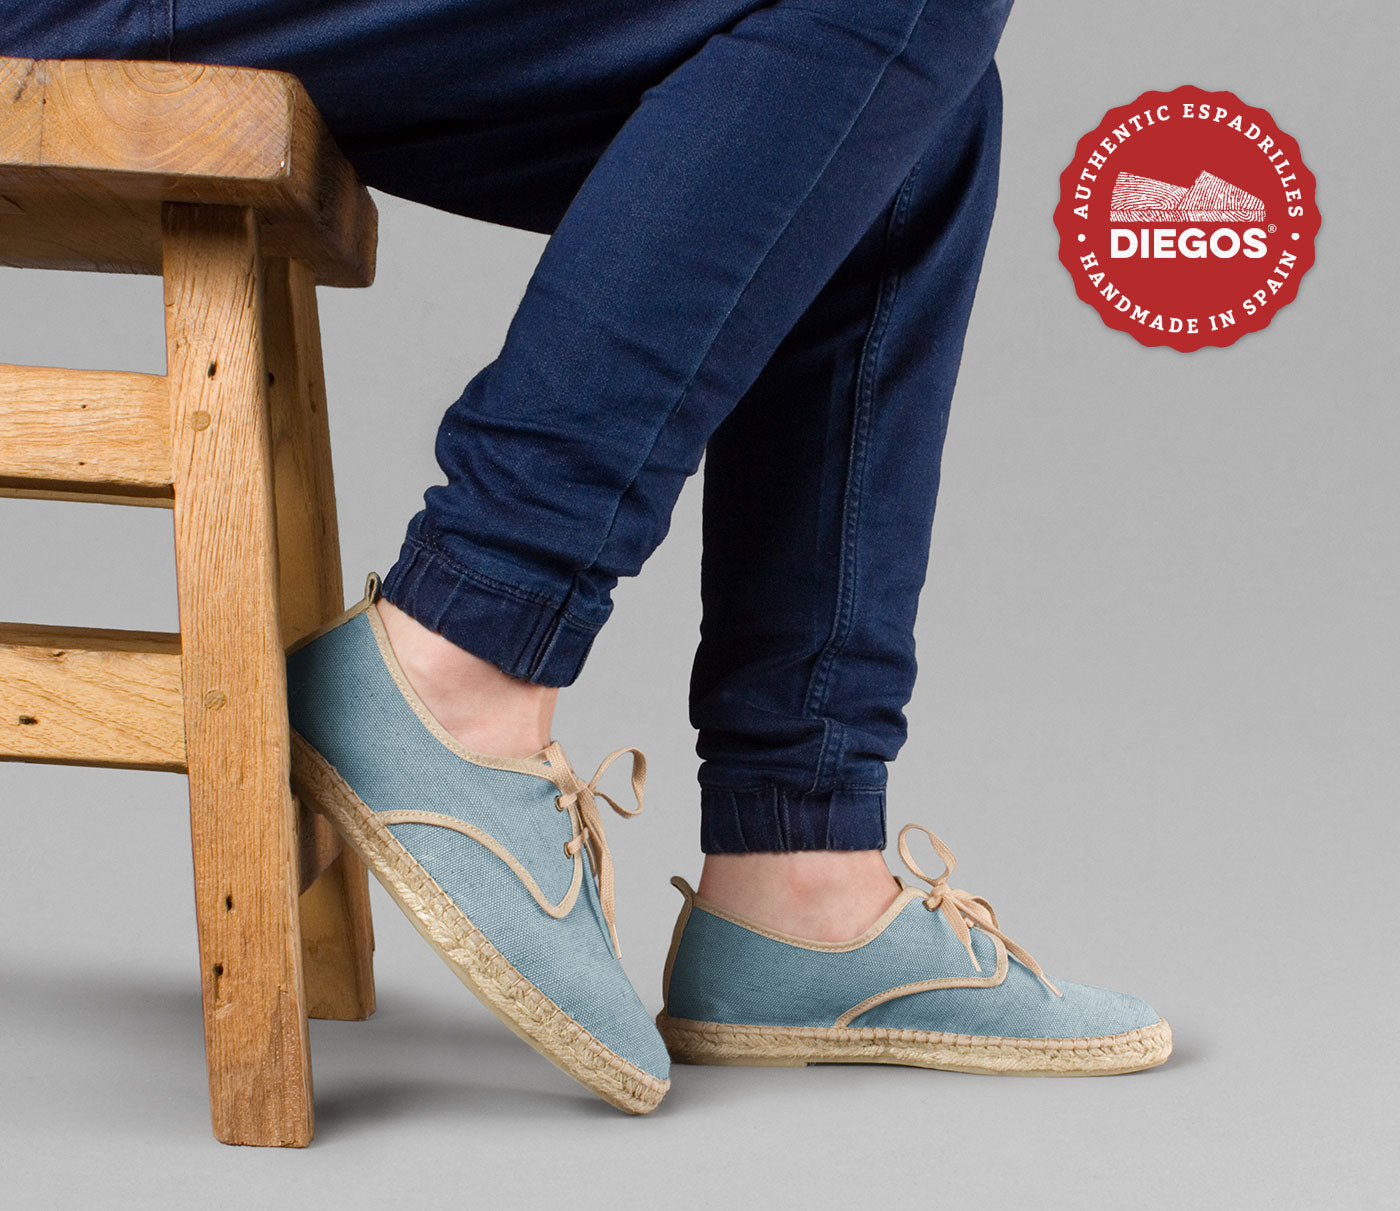 Milepæl and vest Men's blue espadrilles shoes handmade in Spain | DIEGOS® – diegos.com